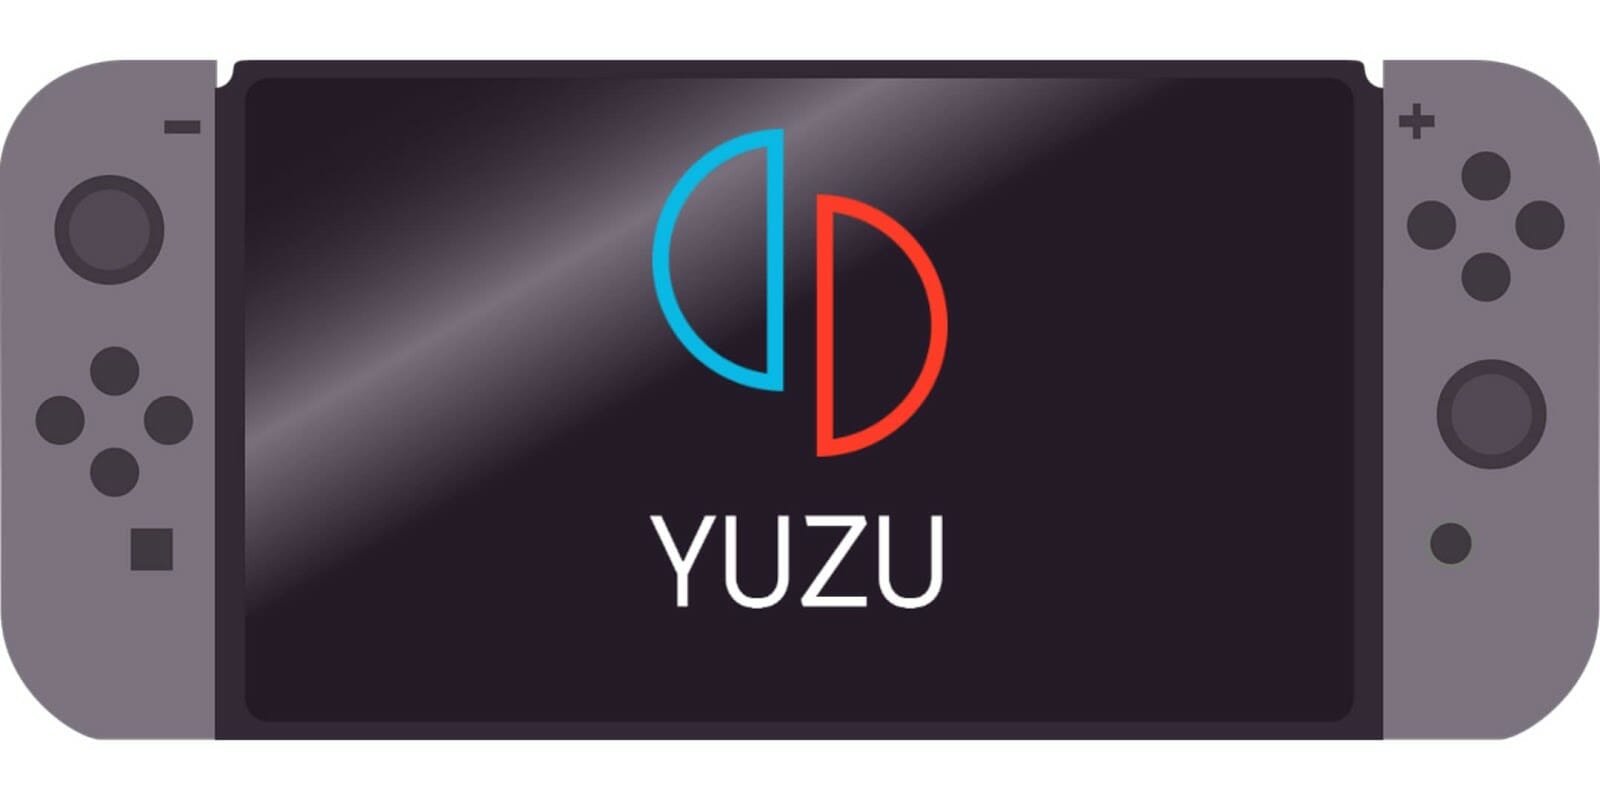 is yuzu emulator legit